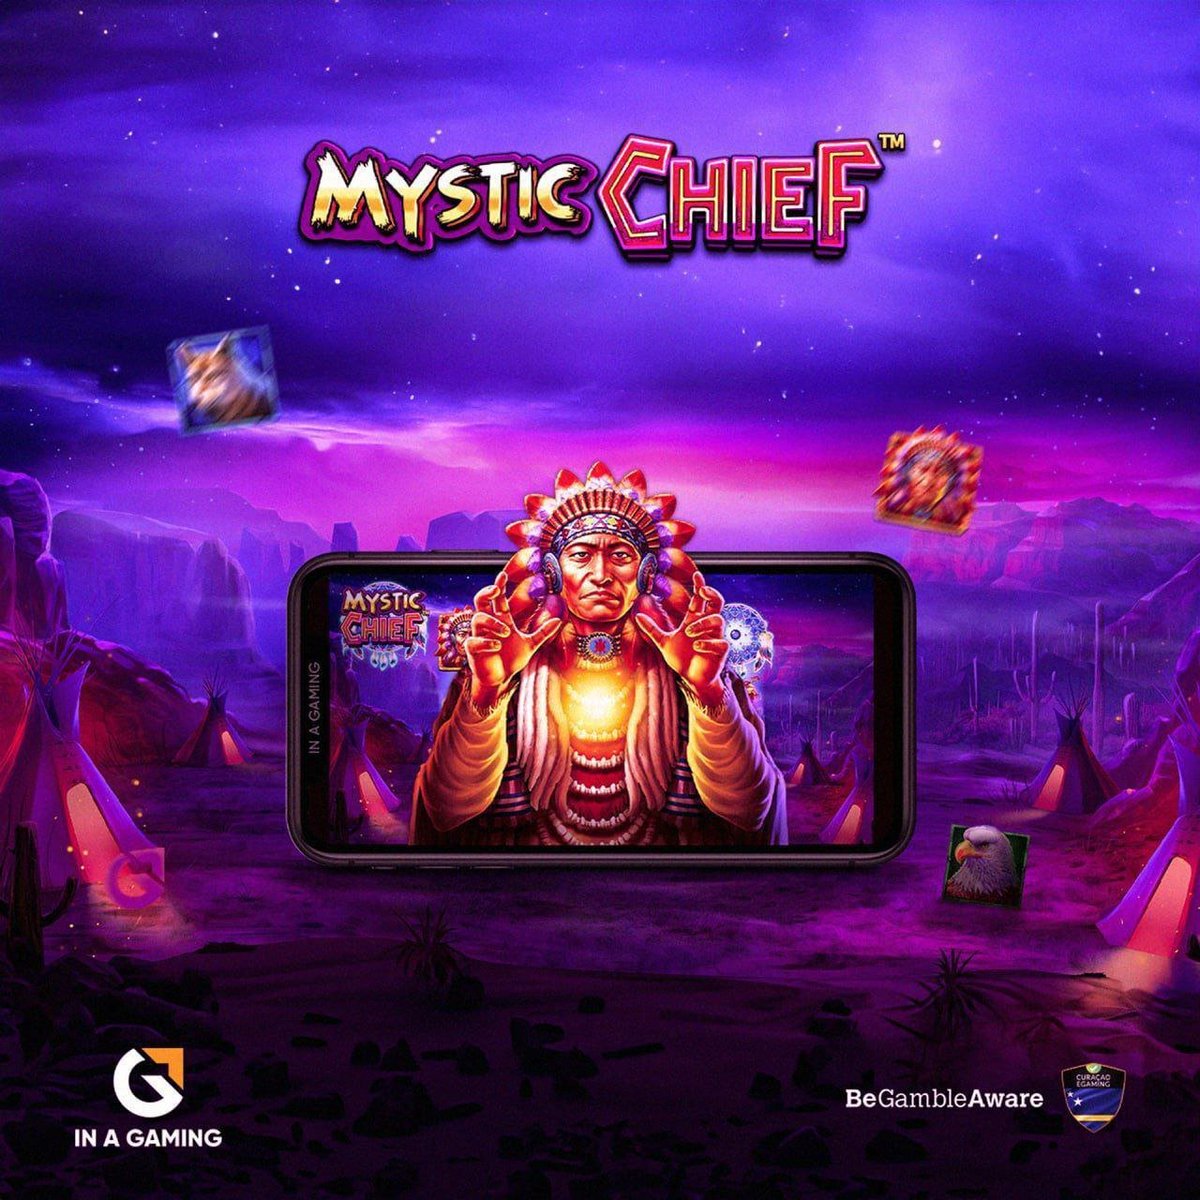 🏕 Mystic Chief slot oyununda 5000x kazanma şansı seni bekliyor! 📲 inagaming.live/twitter